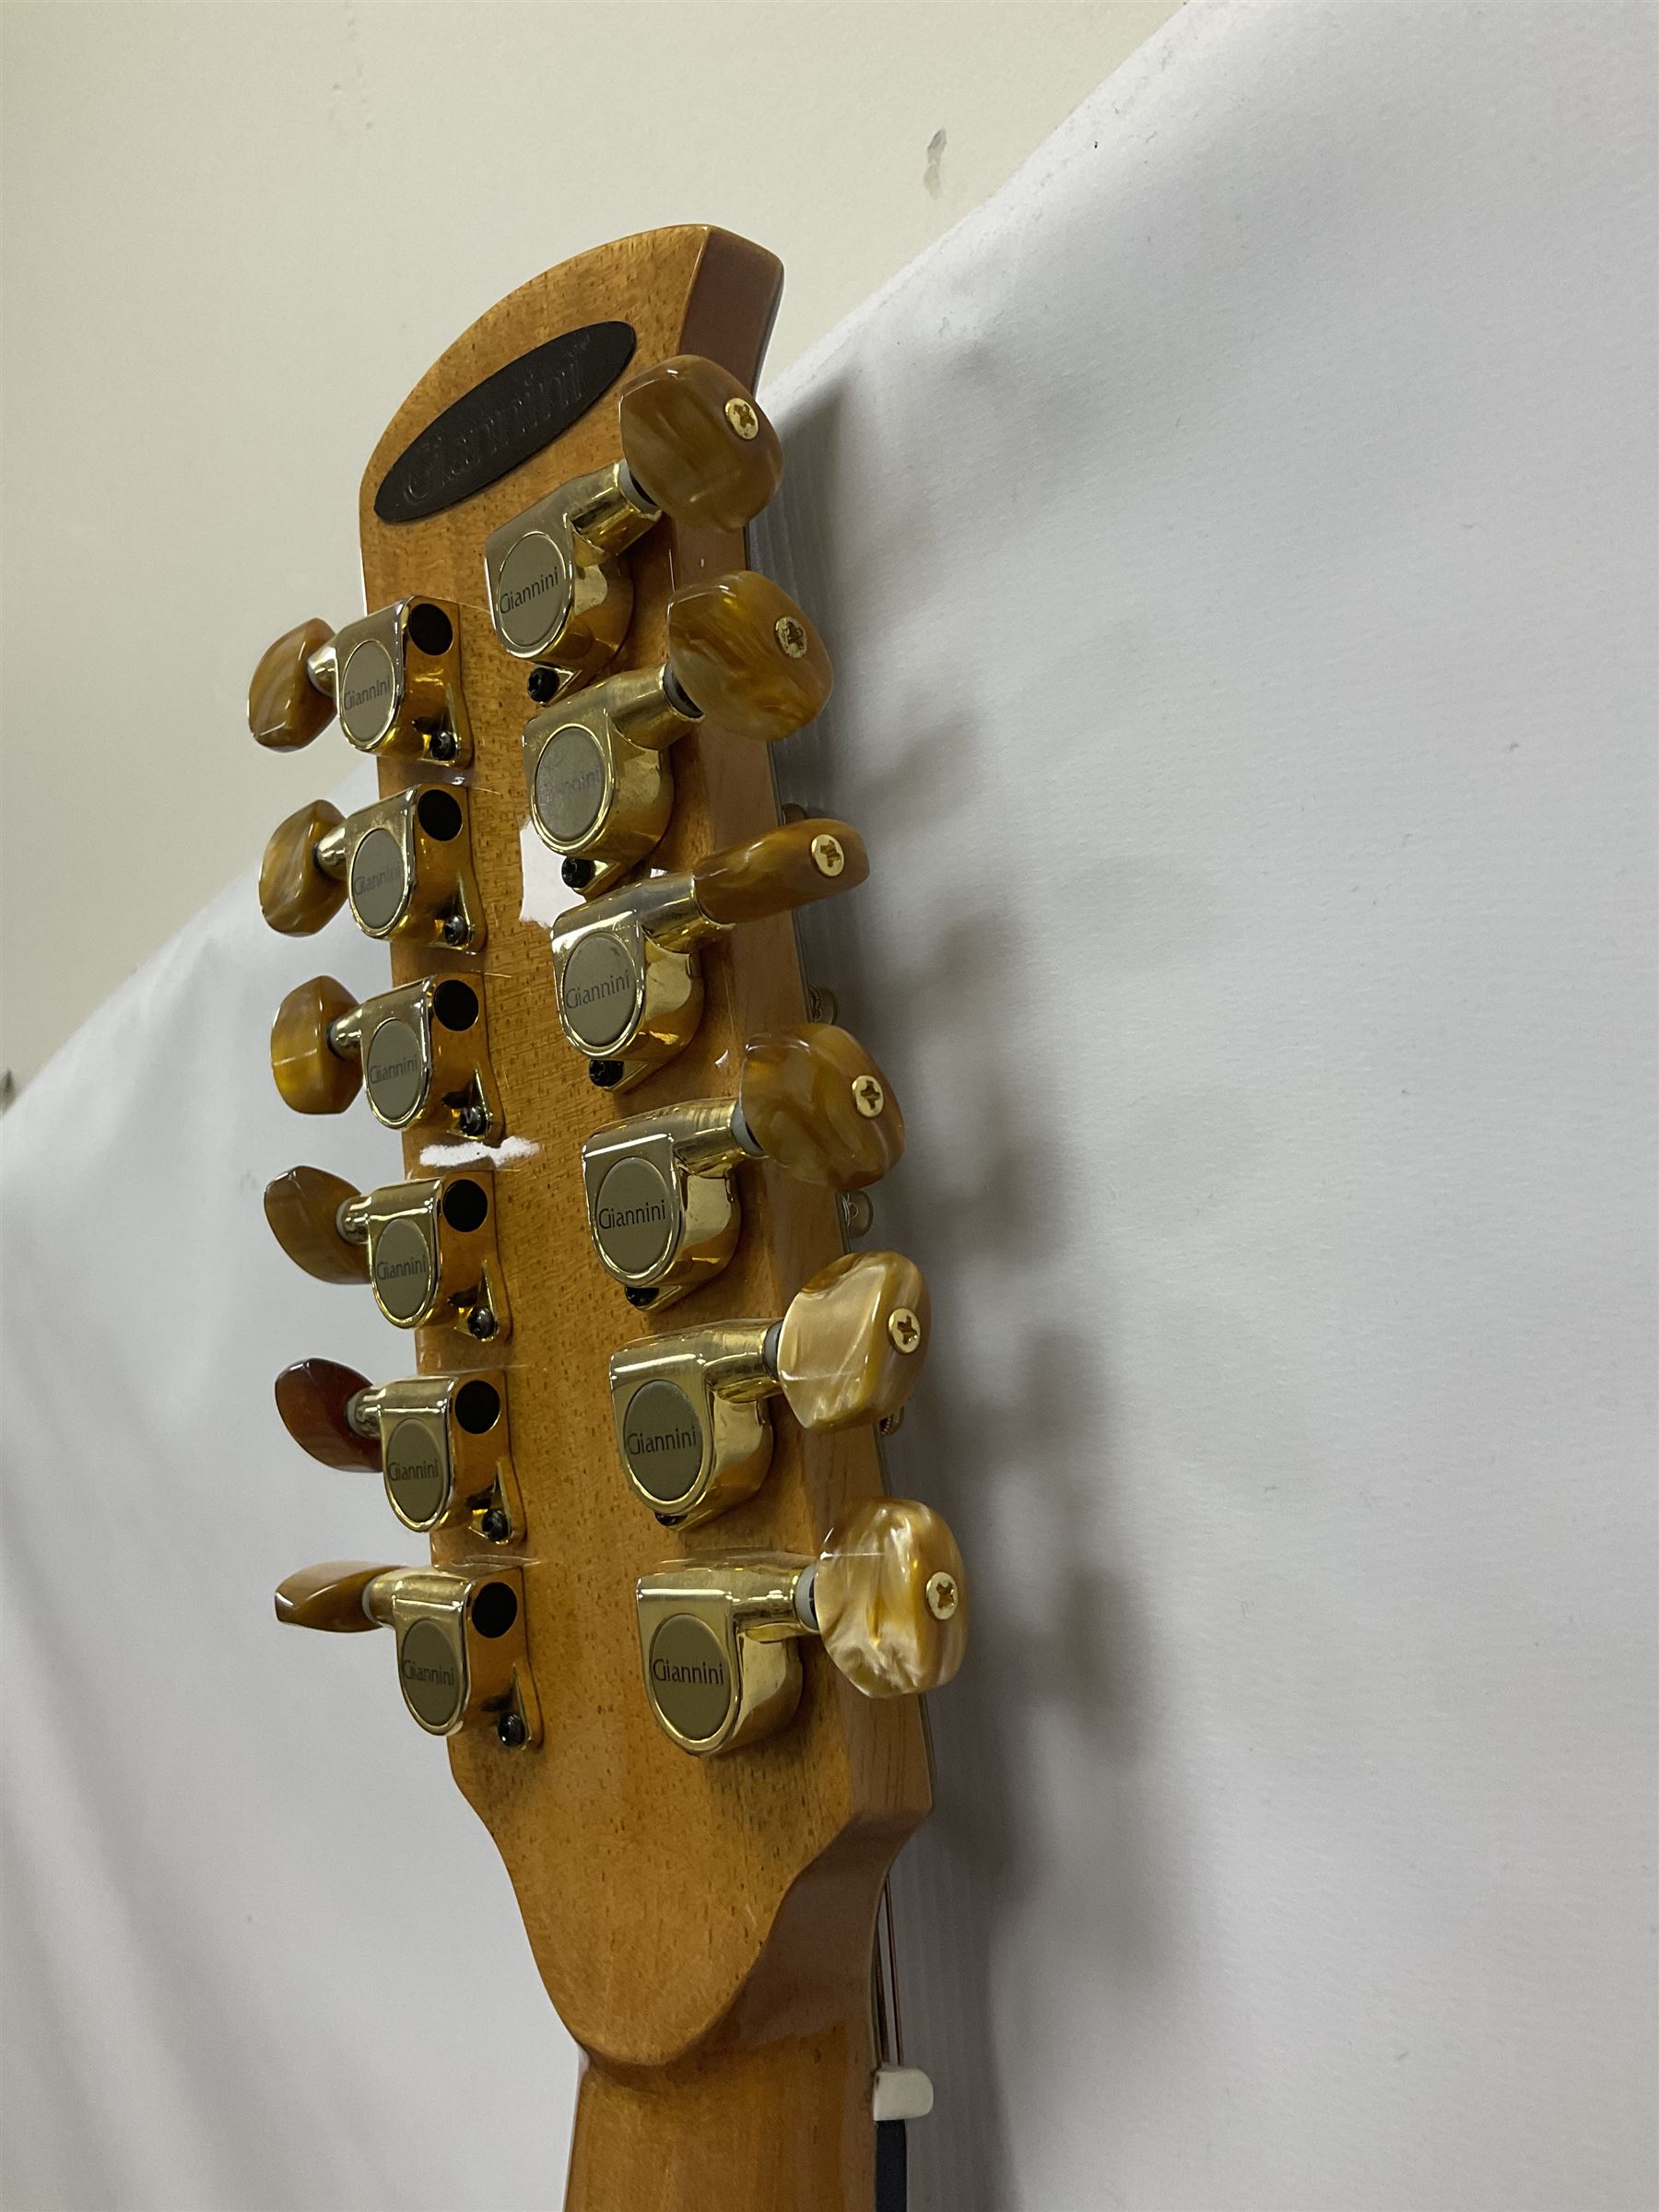 Brazilian Giannini Craviola twelve string acoustic guitar - Image 18 of 22